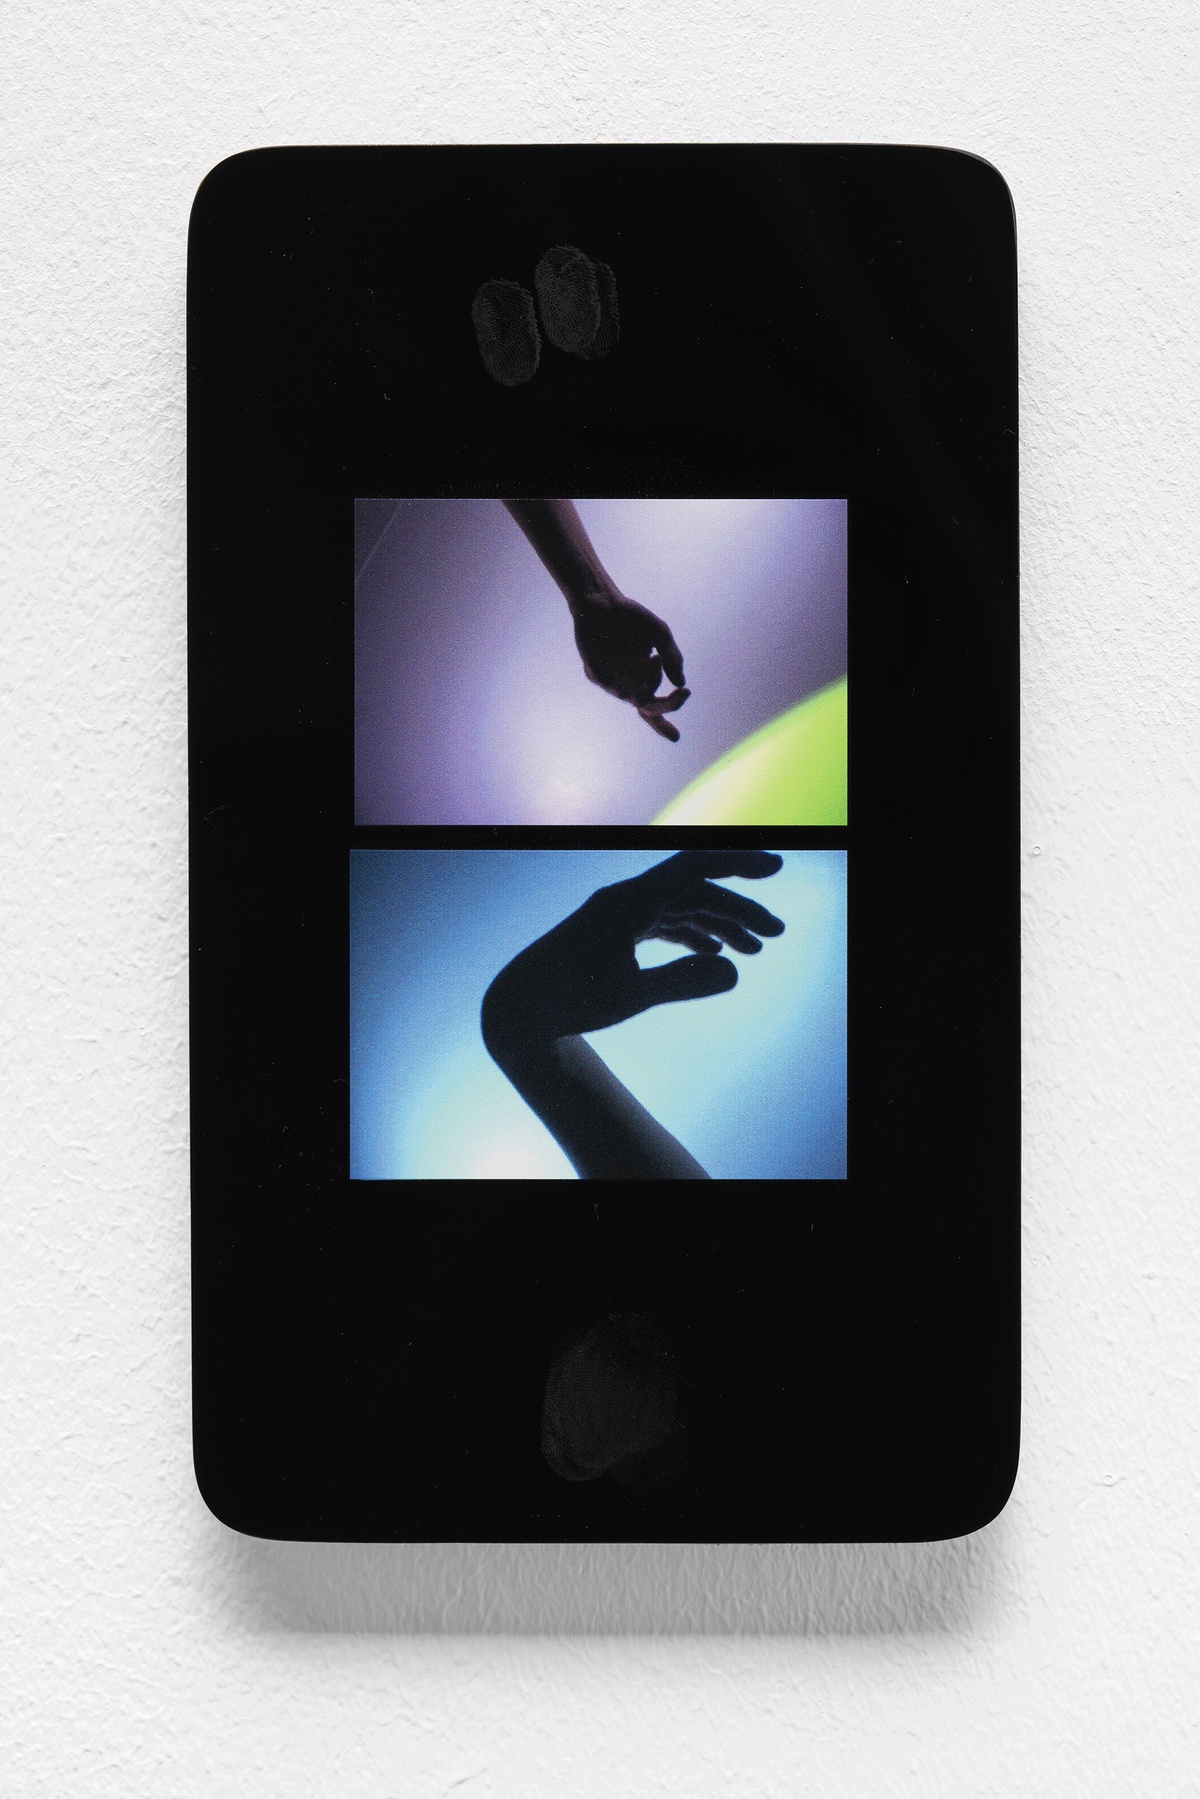 Jenna BlissFriendship #1Plexiglass, UV print of iSight webcam photo, Acrylic paint12.7 × 21.6 × 0.95 cm (3/8” × 5” × 8.5”)